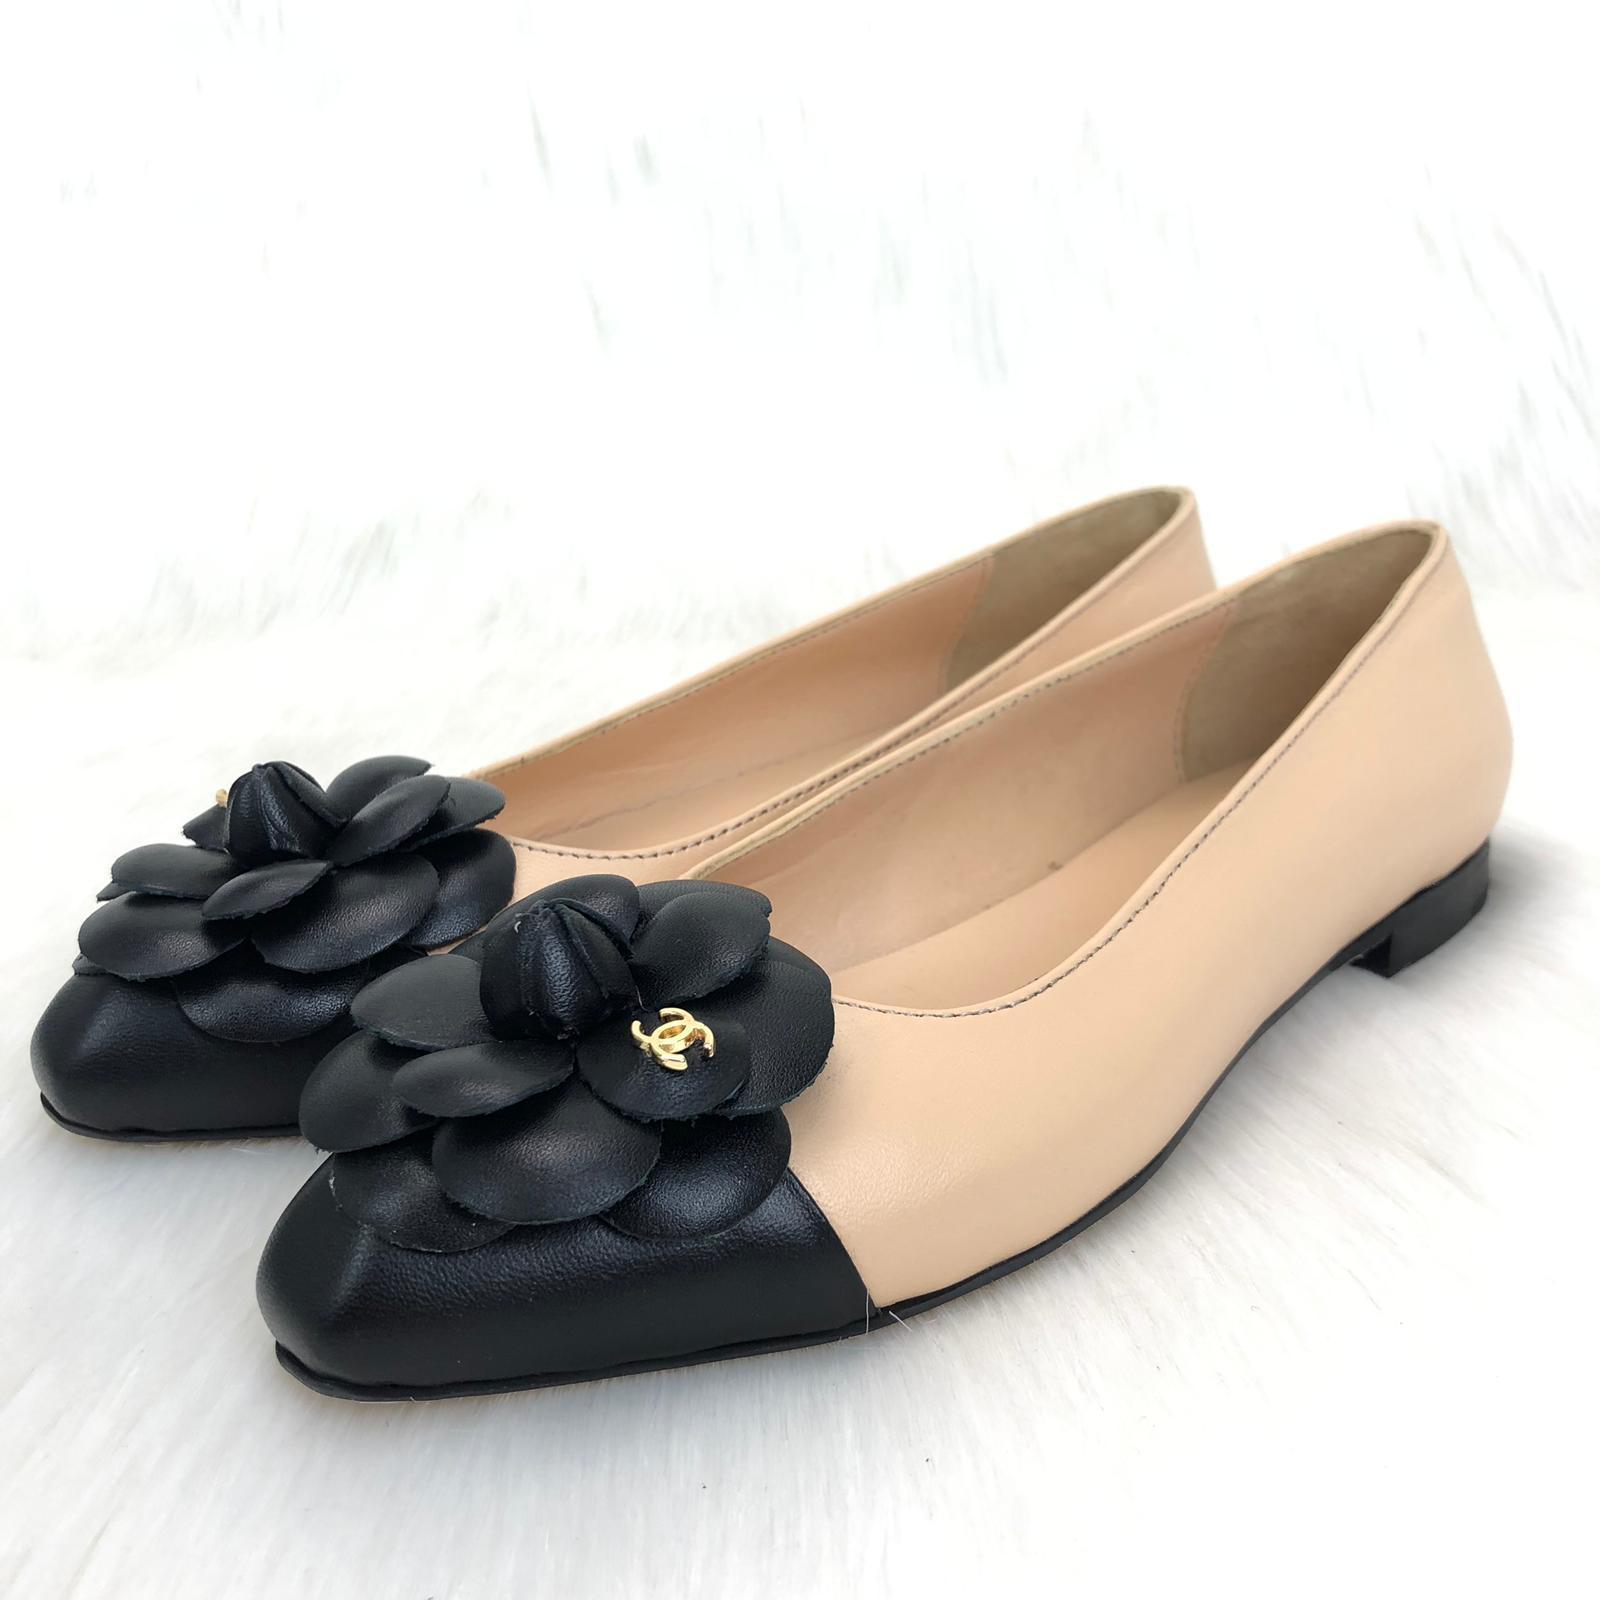 camellia shoes